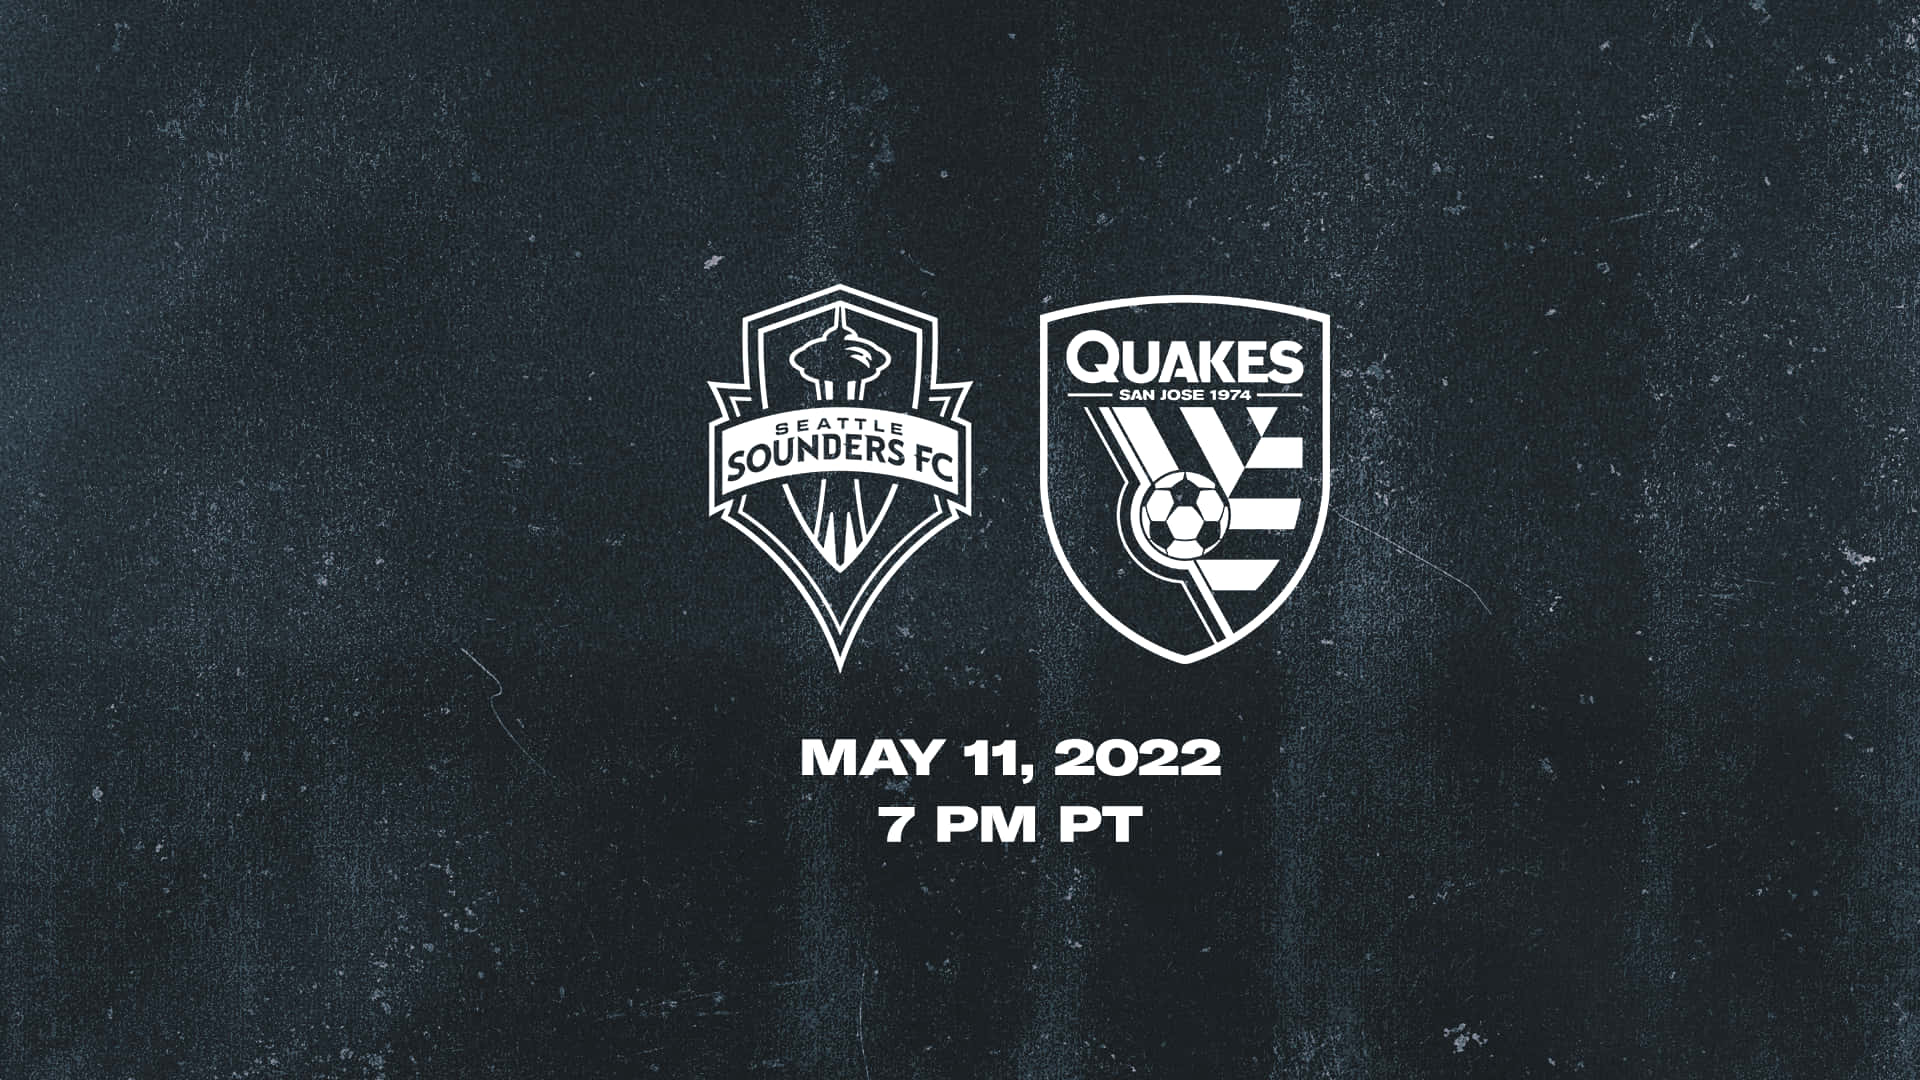 Seattlesounders Fc Und Quakes-logo Wallpaper